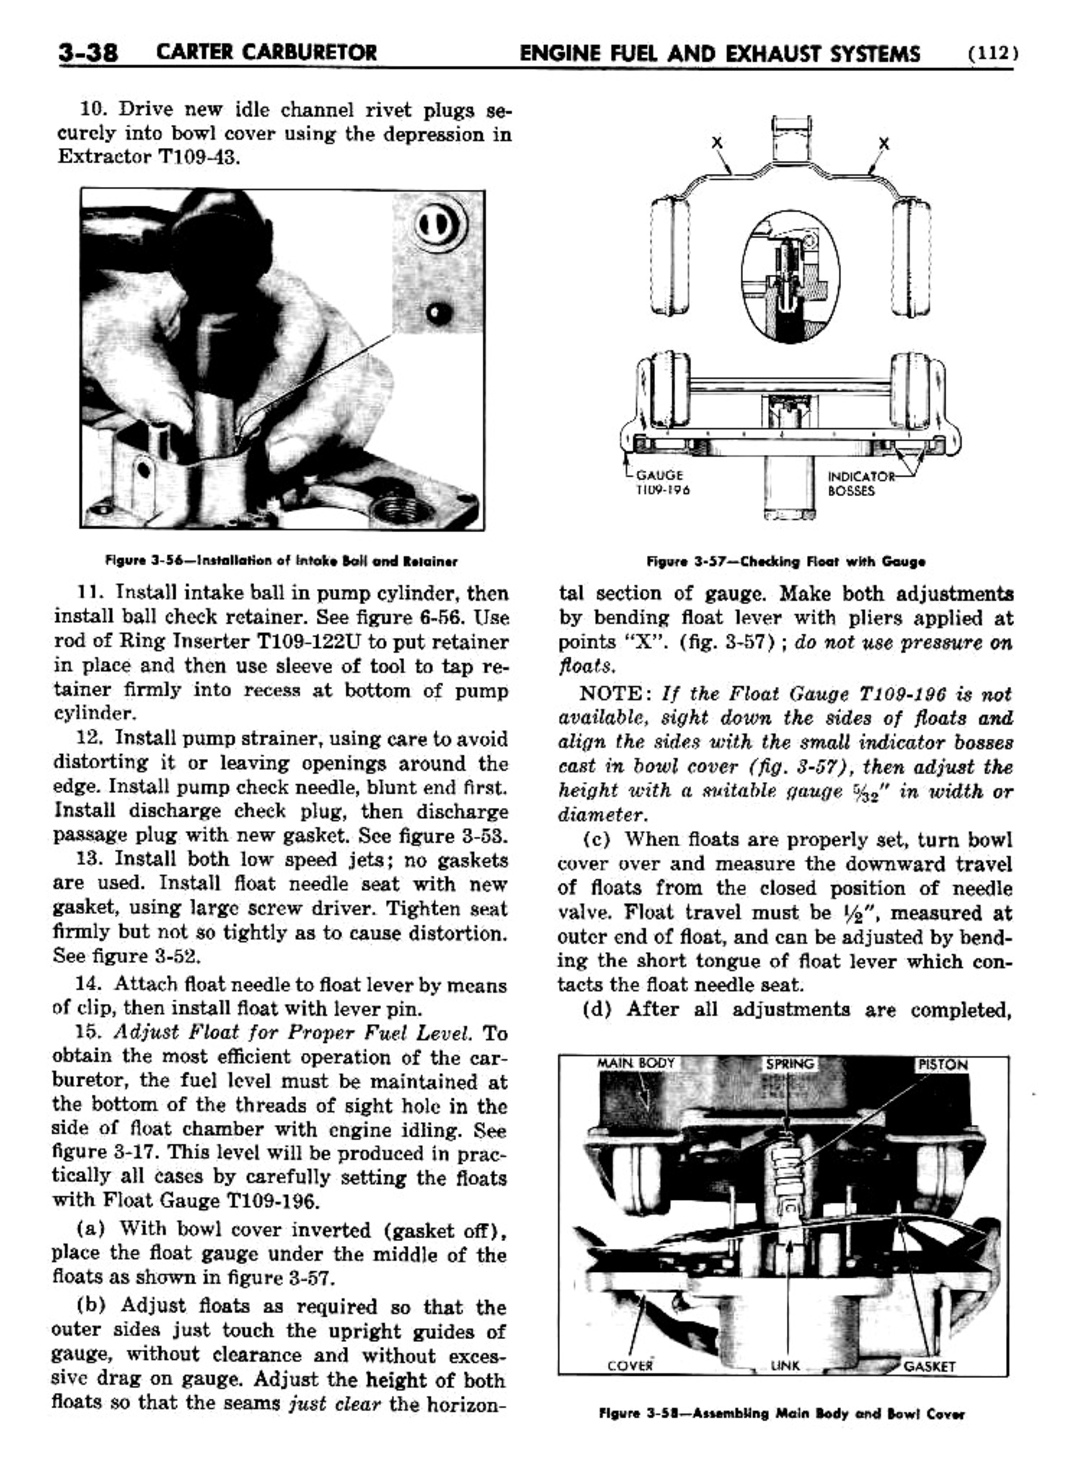 n_04 1948 Buick Shop Manual - Engine Fuel & Exhaust-038-038.jpg